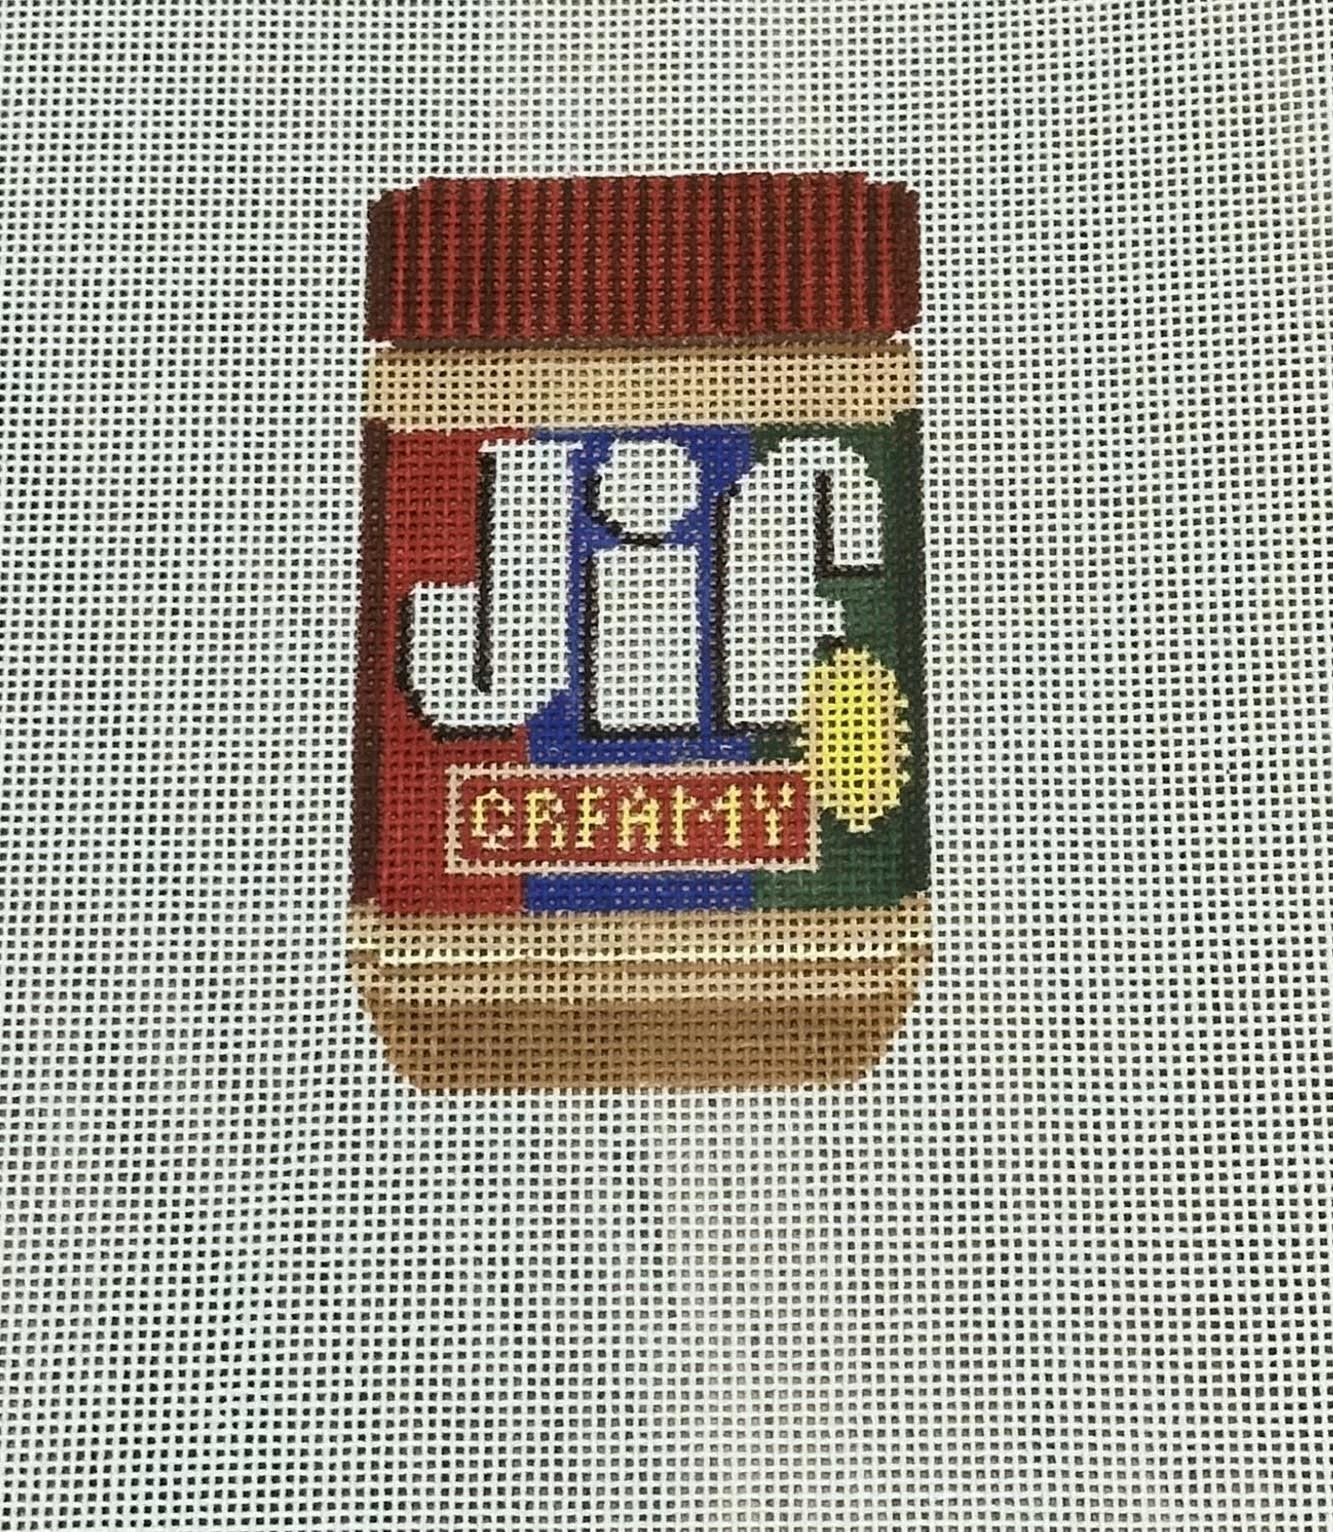 Needle Arts Studio Jif Peanut Butter